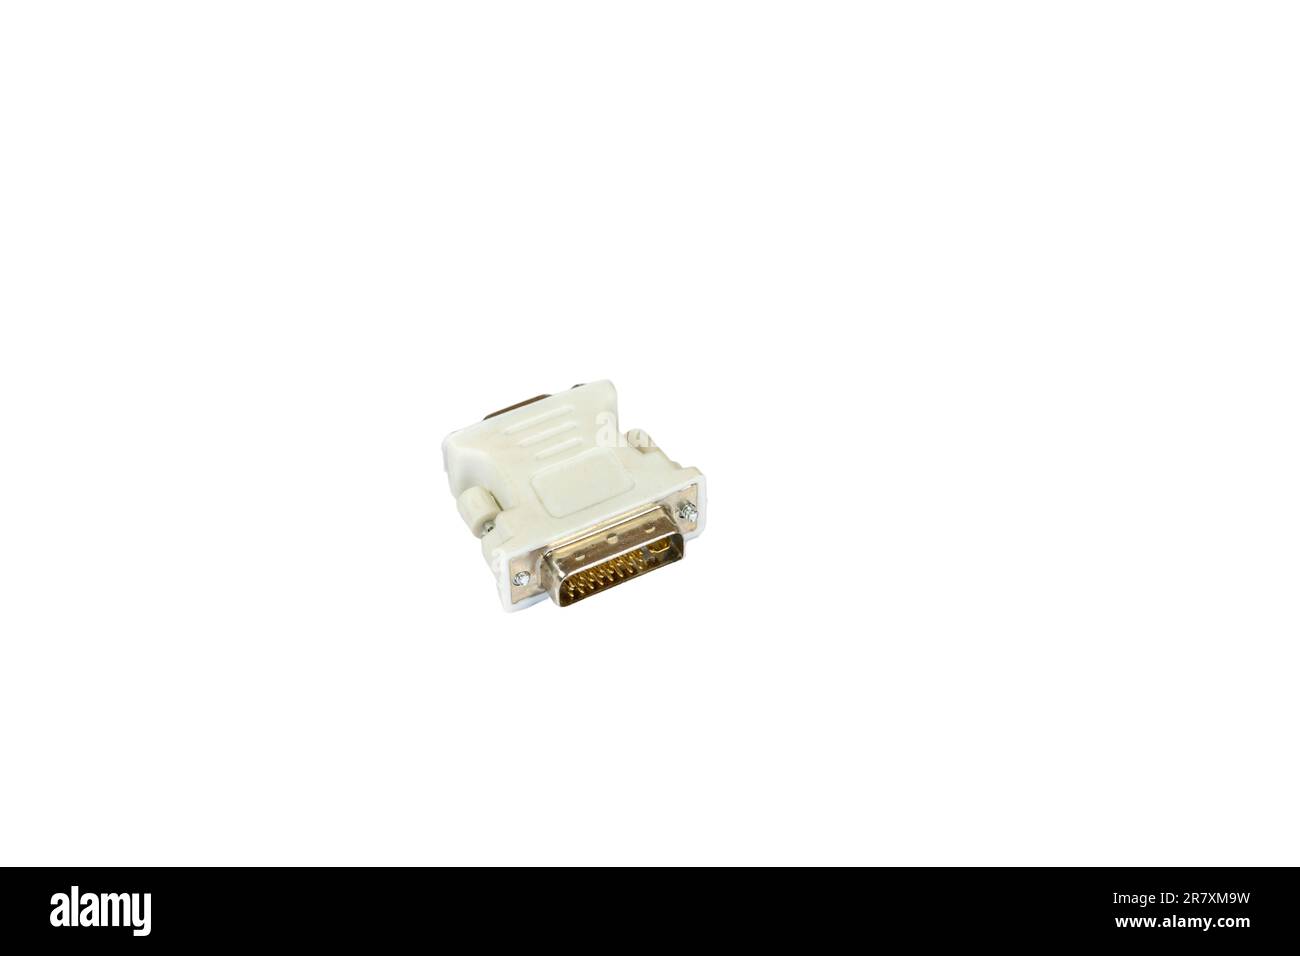 VGA to DVI converter adaptor for monitor display Stock Photo